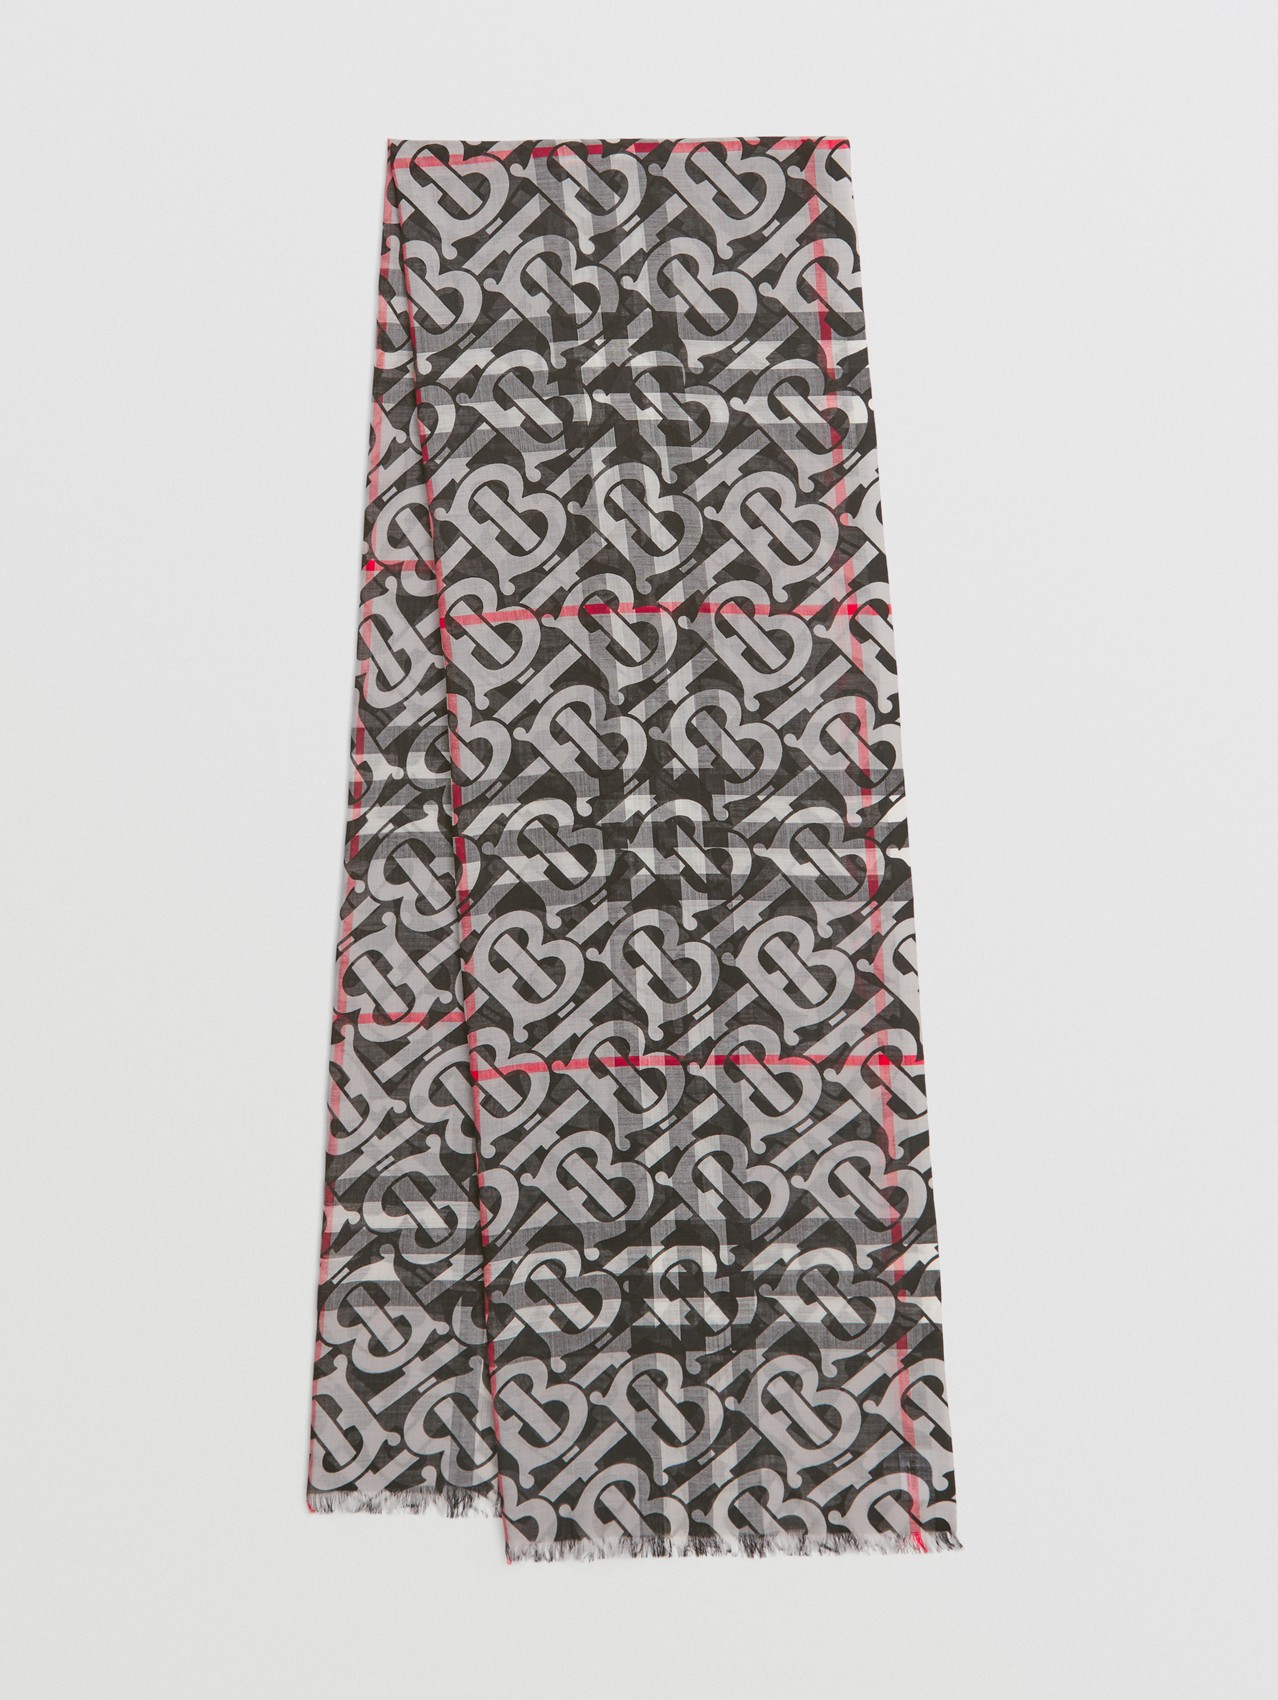 Echarpe de lã e seda com estampa xadrez e monograma in Cinza